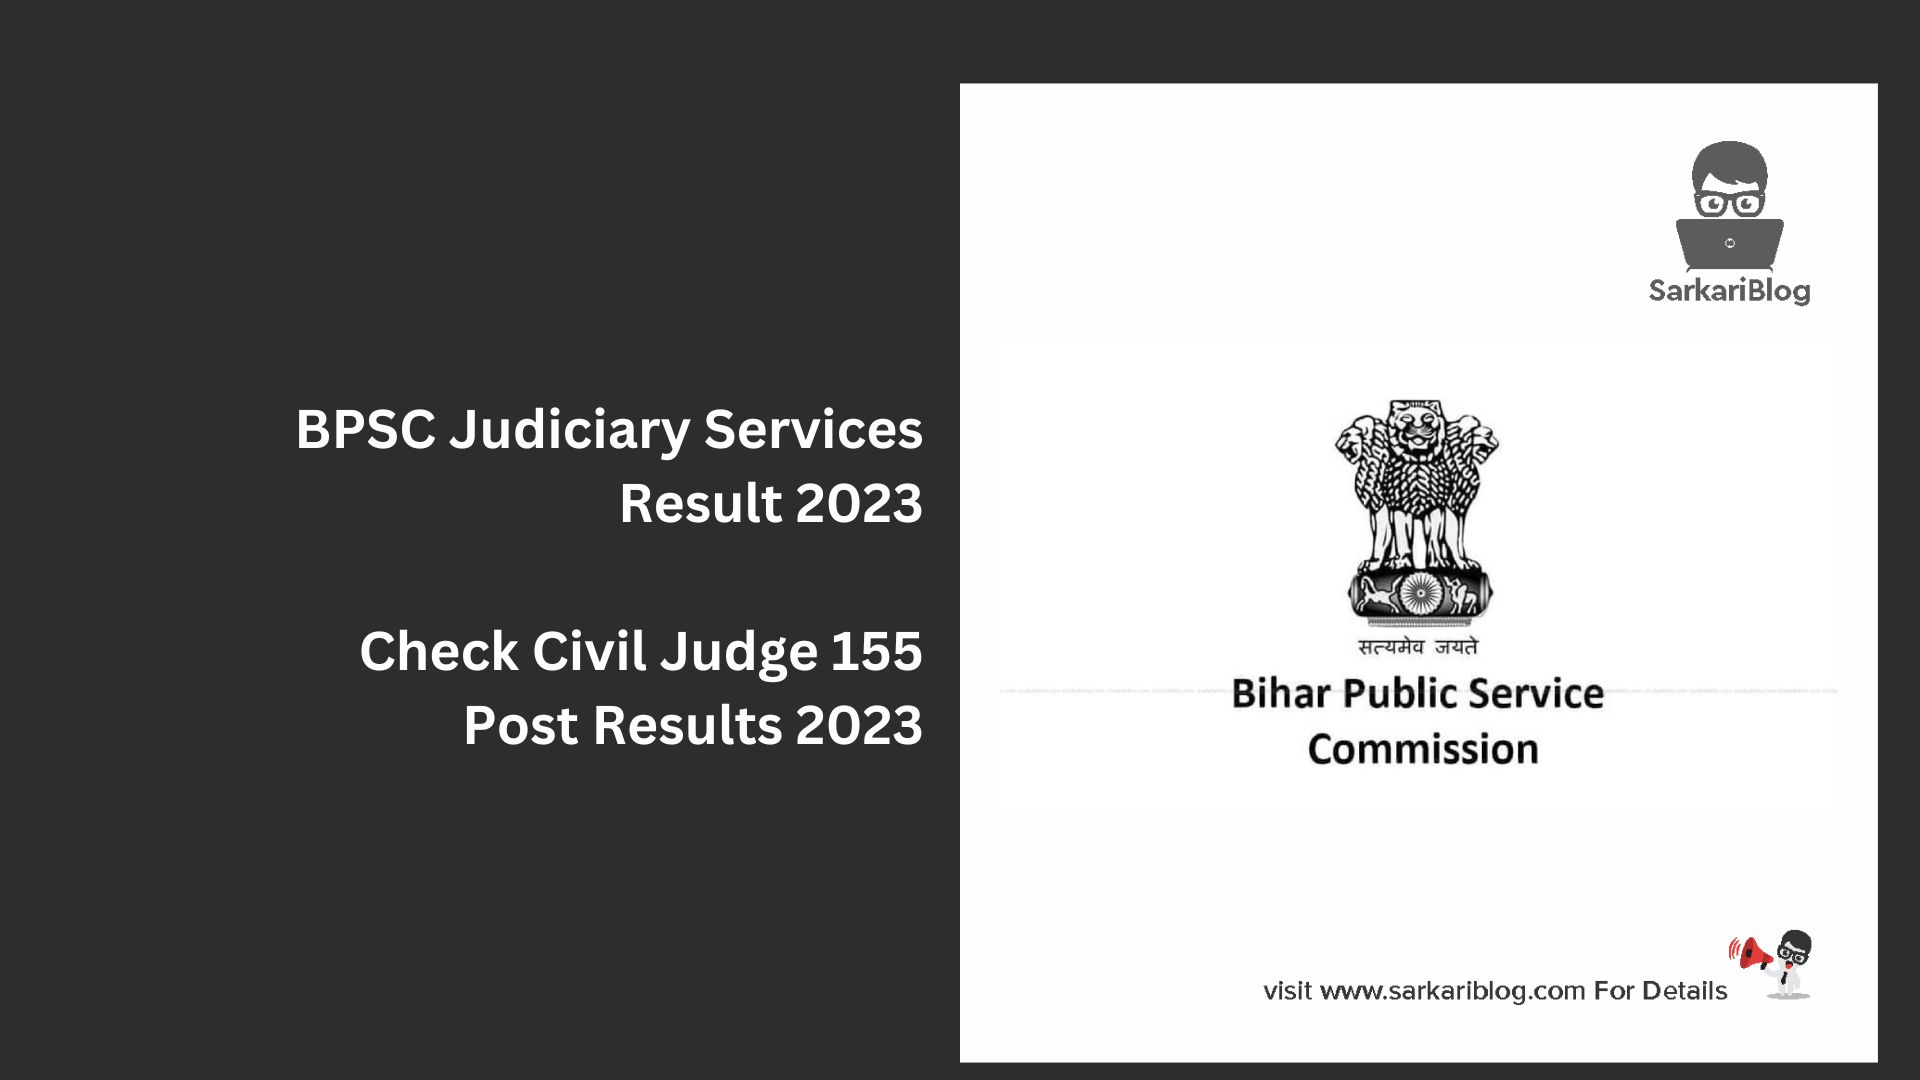 BPSC Judiciary Services Result 2023